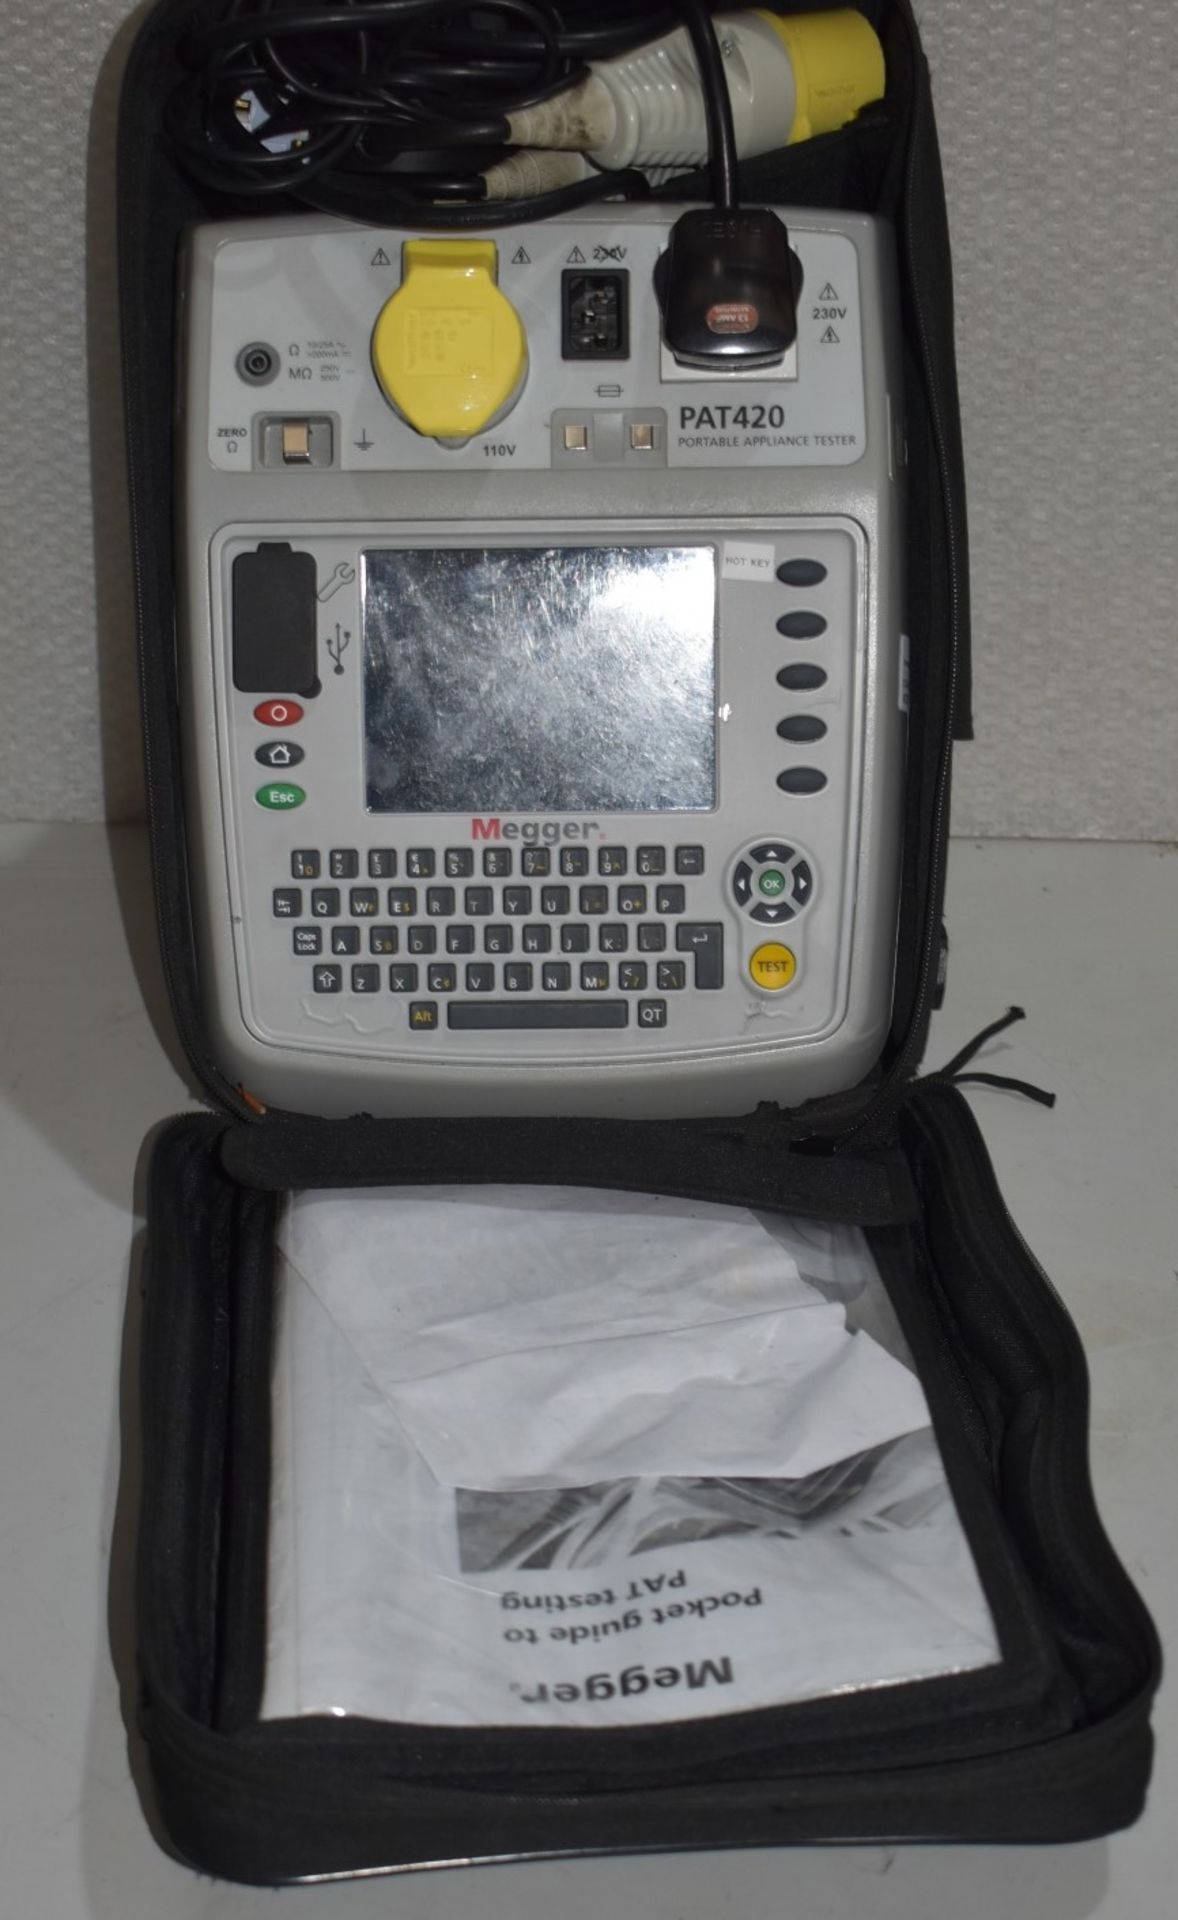 1 x MEGGER PAT420 Portable Appliance Tester- Original RRP £1,620.00 - Includes Power Lead, Pocket - Image 5 of 6